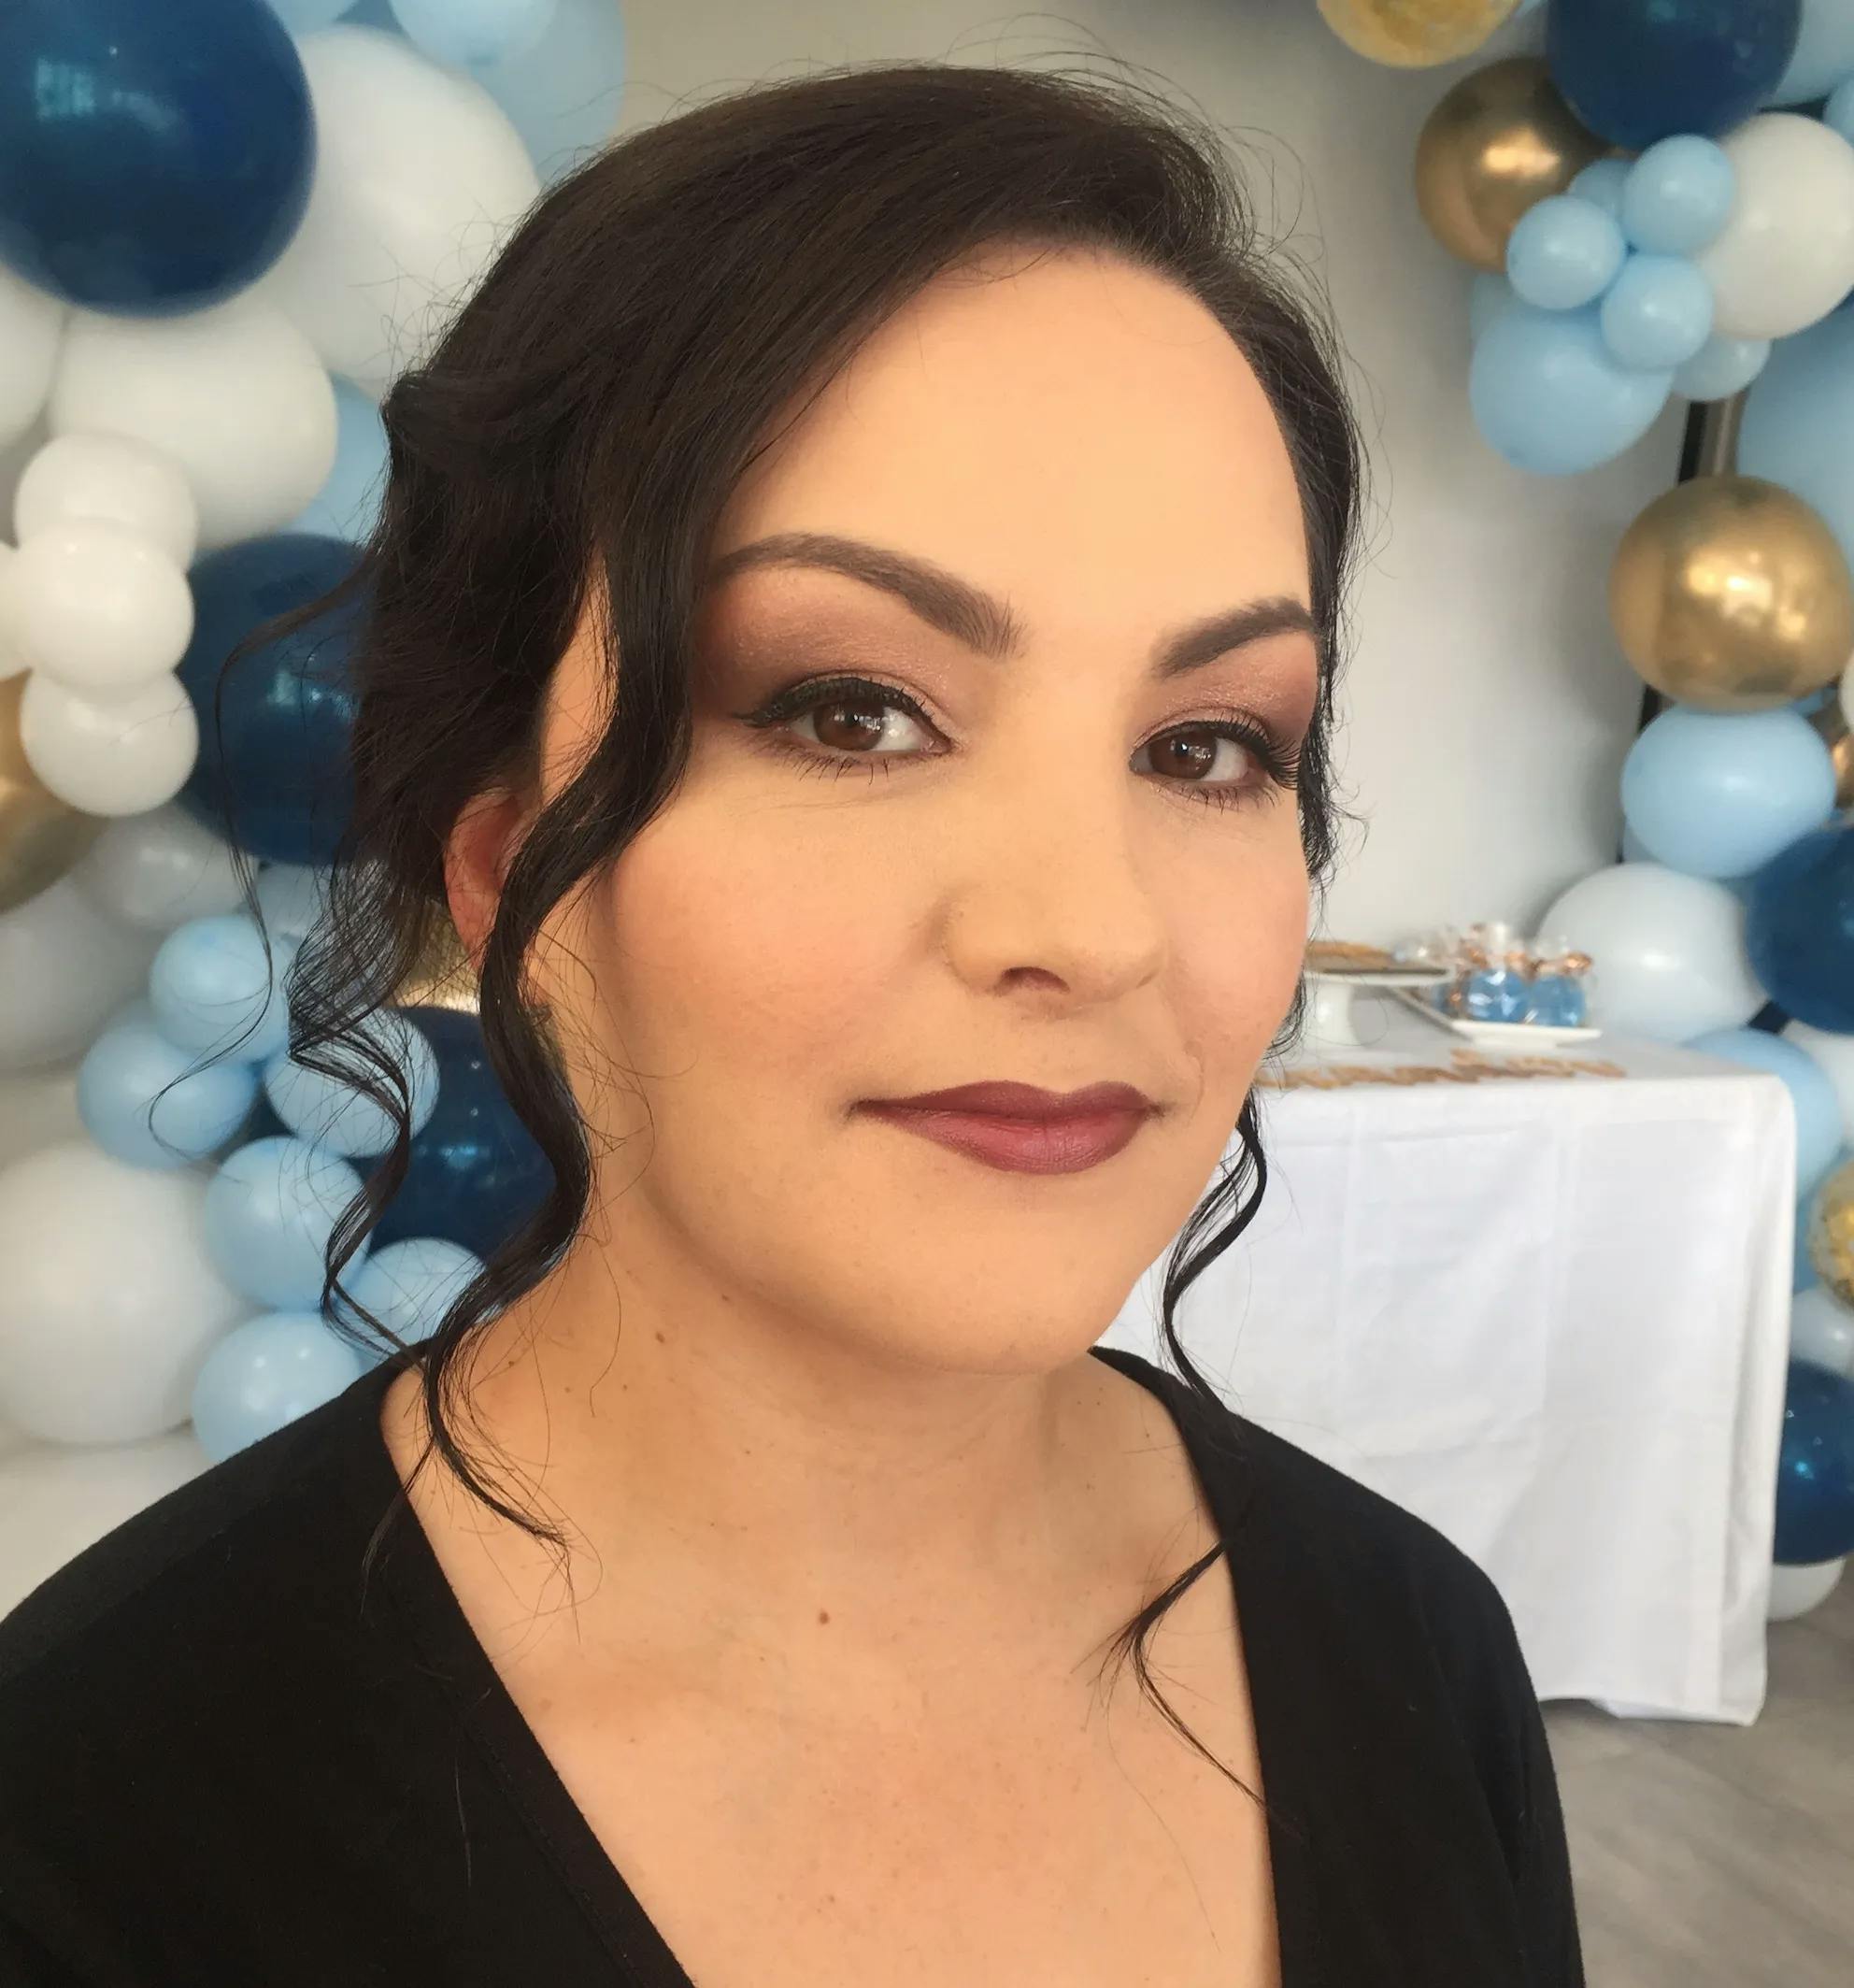 Customer Testimonial for Hair Stylist and Makeup Artist in San Antonio